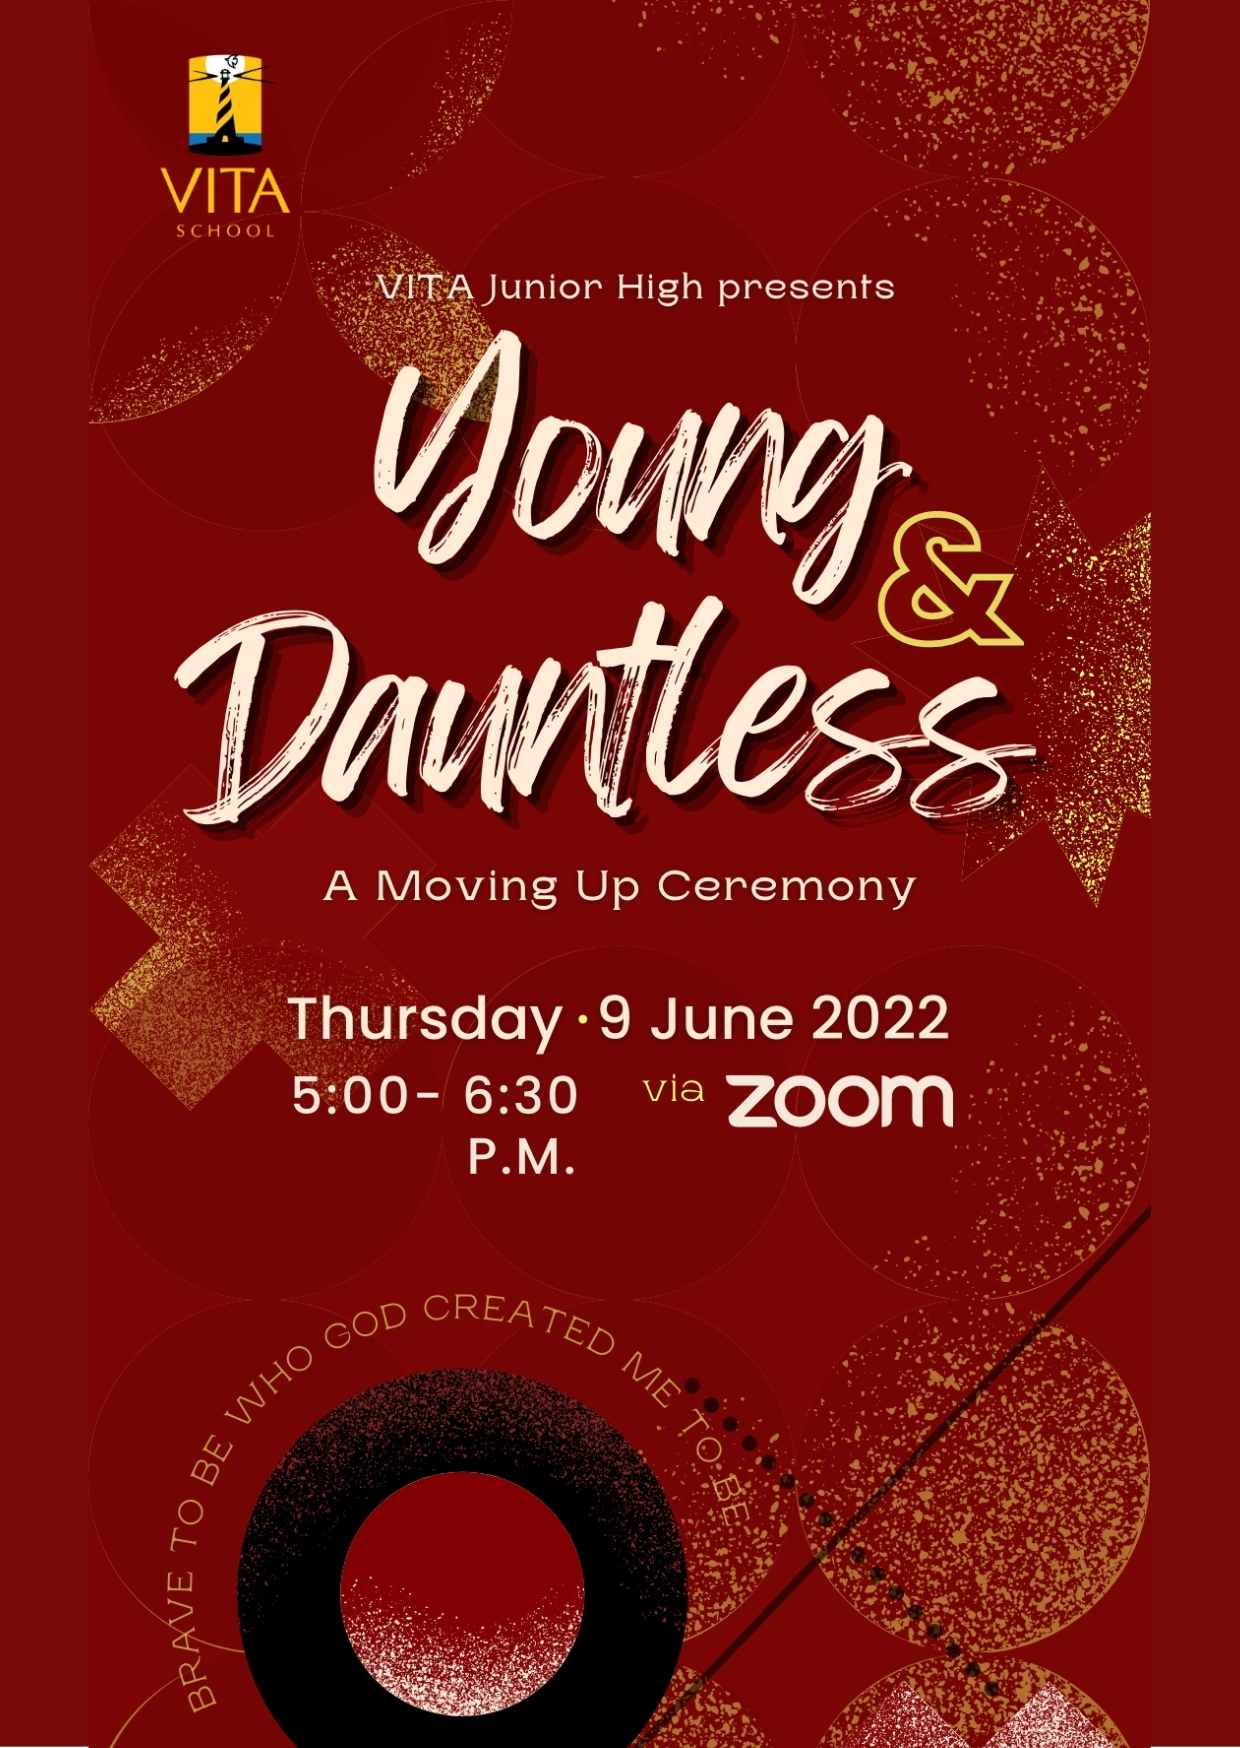 VITA Junior High Moving Up Celebration - Young and Dauntless